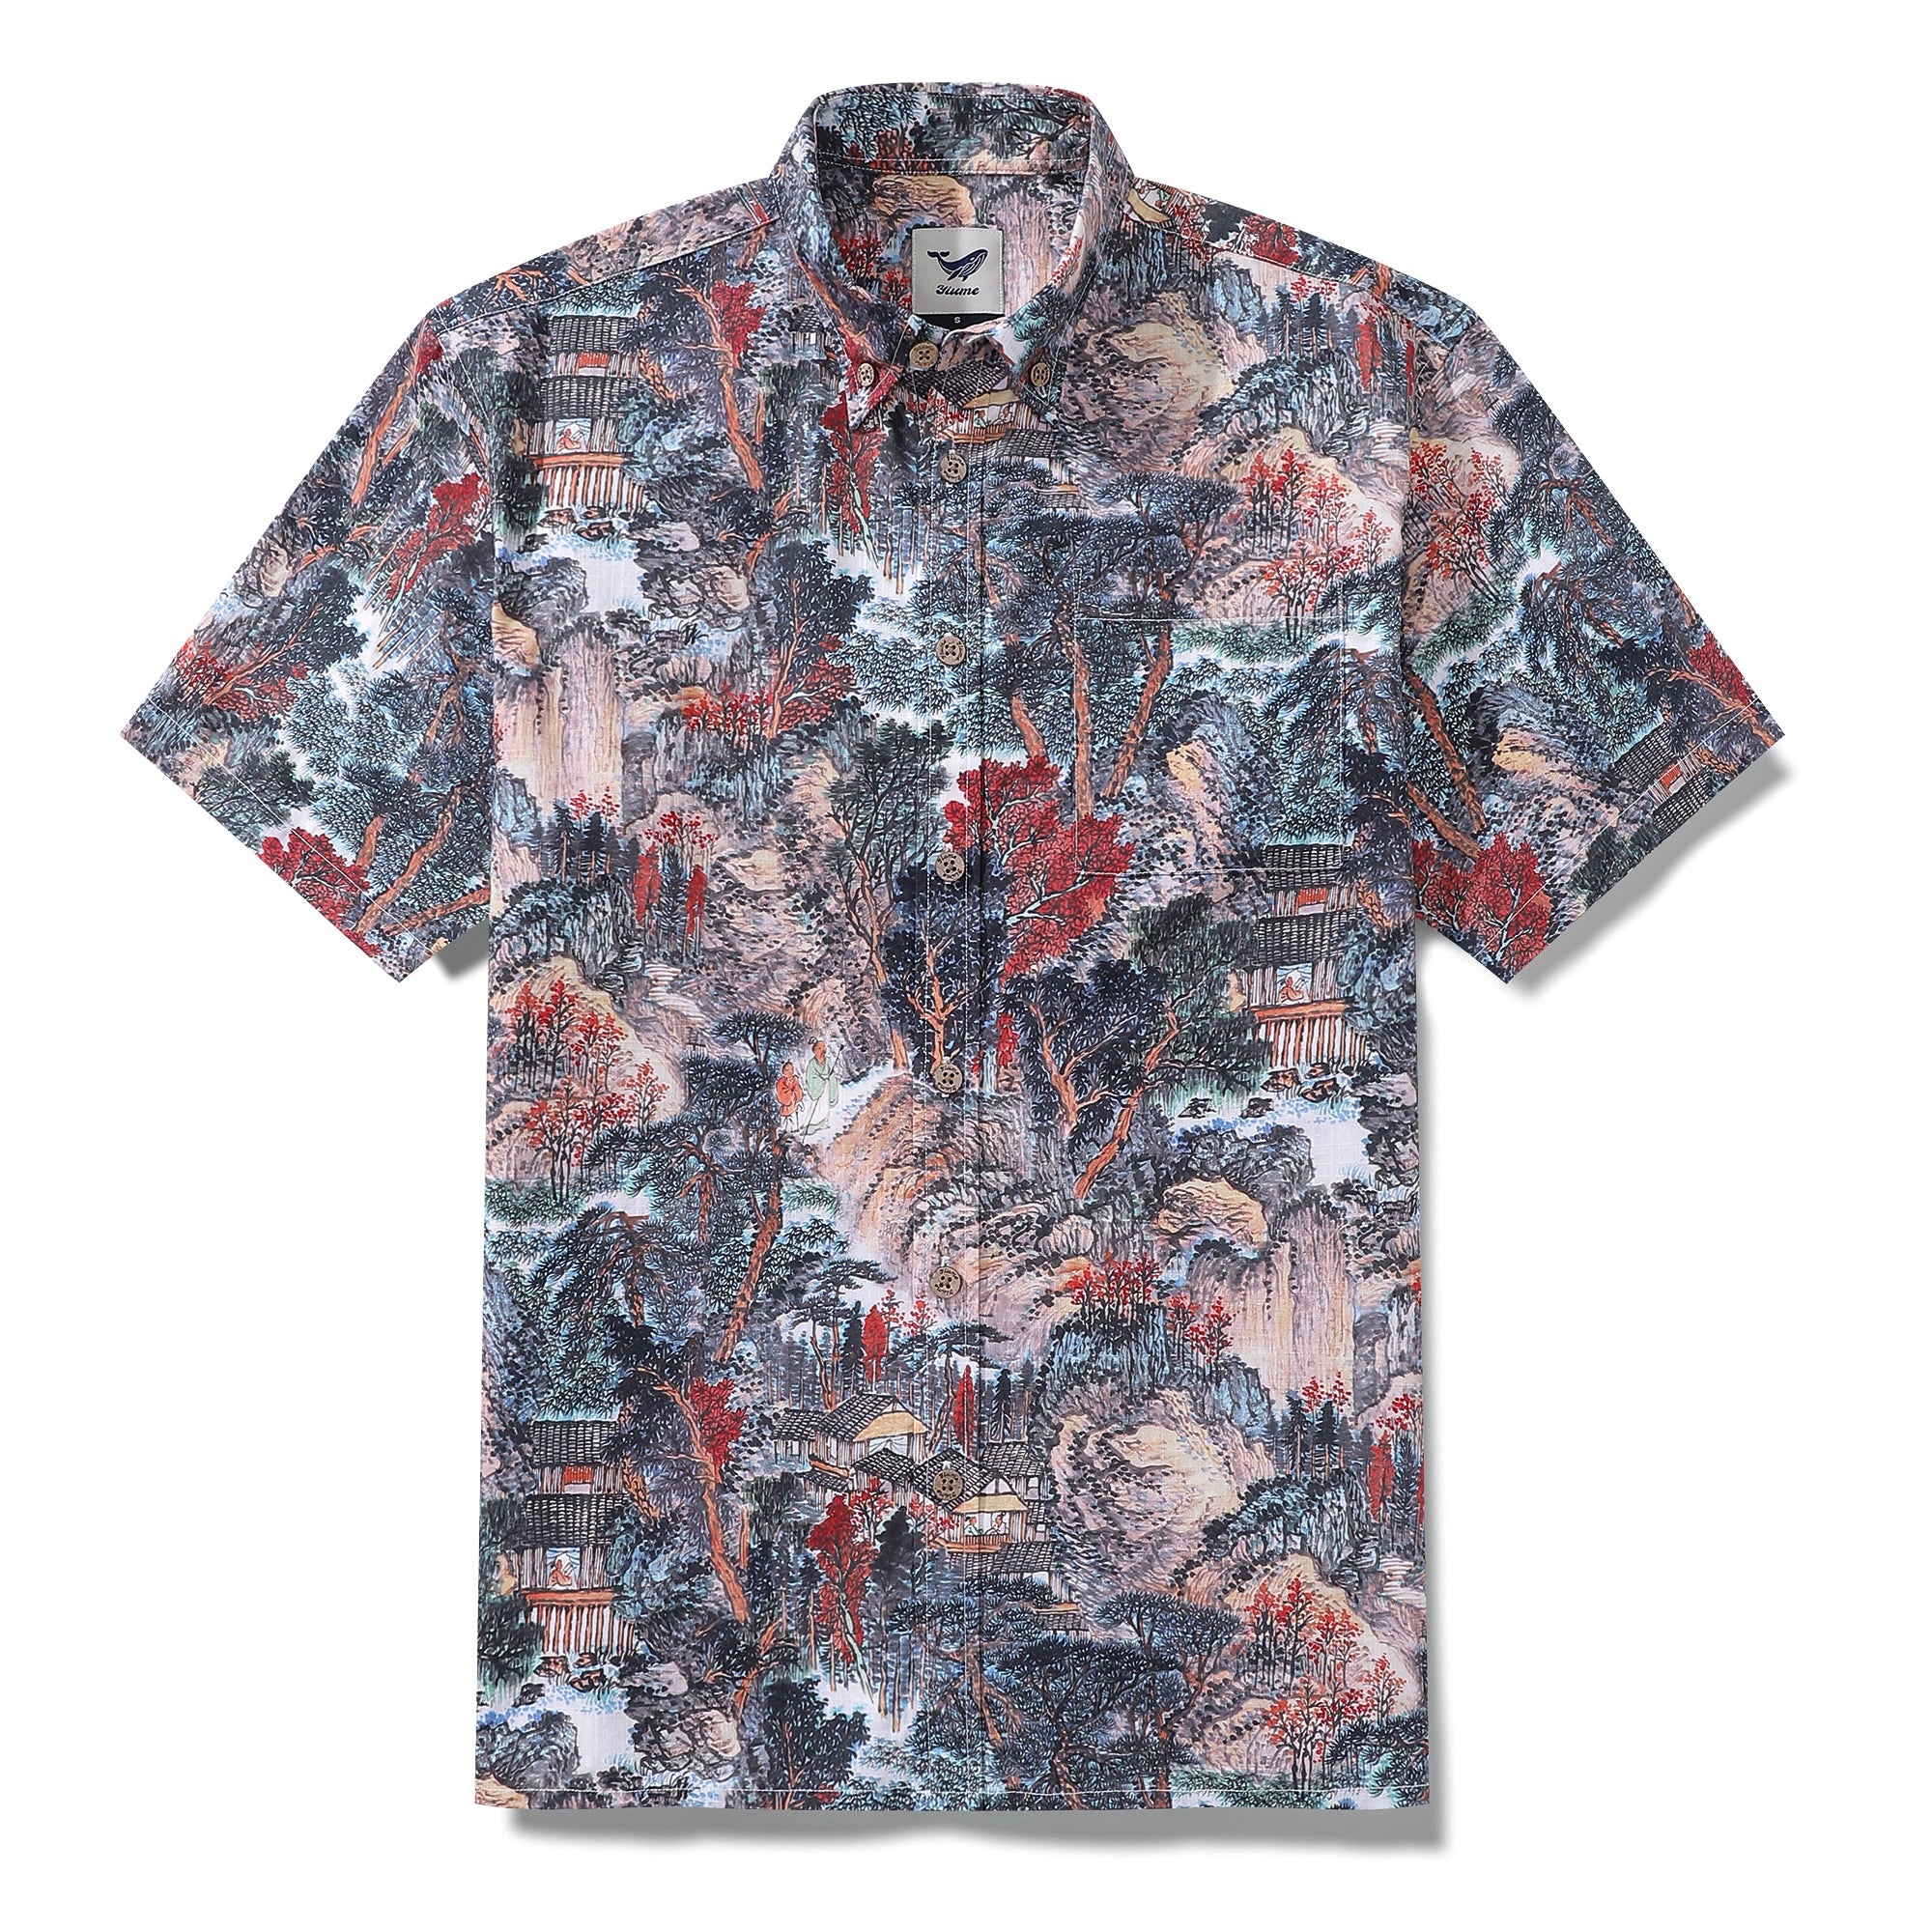 Men's Hawaiian Shirt Majesty of the Mountains Print Cotton Short Sleev ...